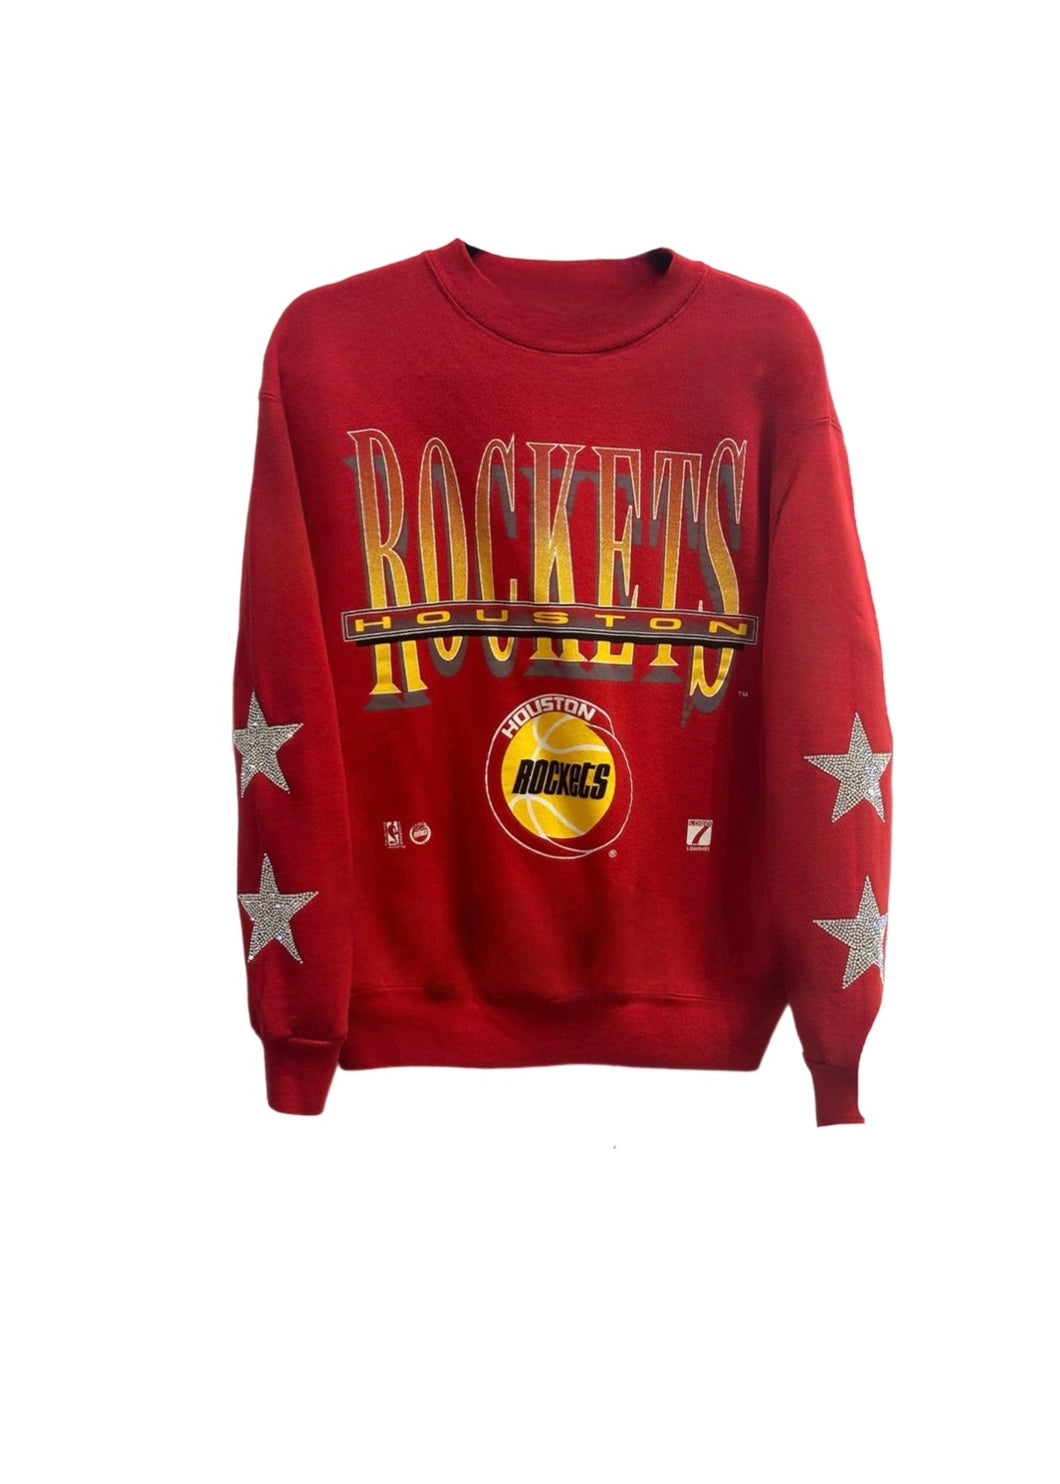 Houston Rockets, NBA One of a KIND Vintage Sweatshirt with Crystal Star Design